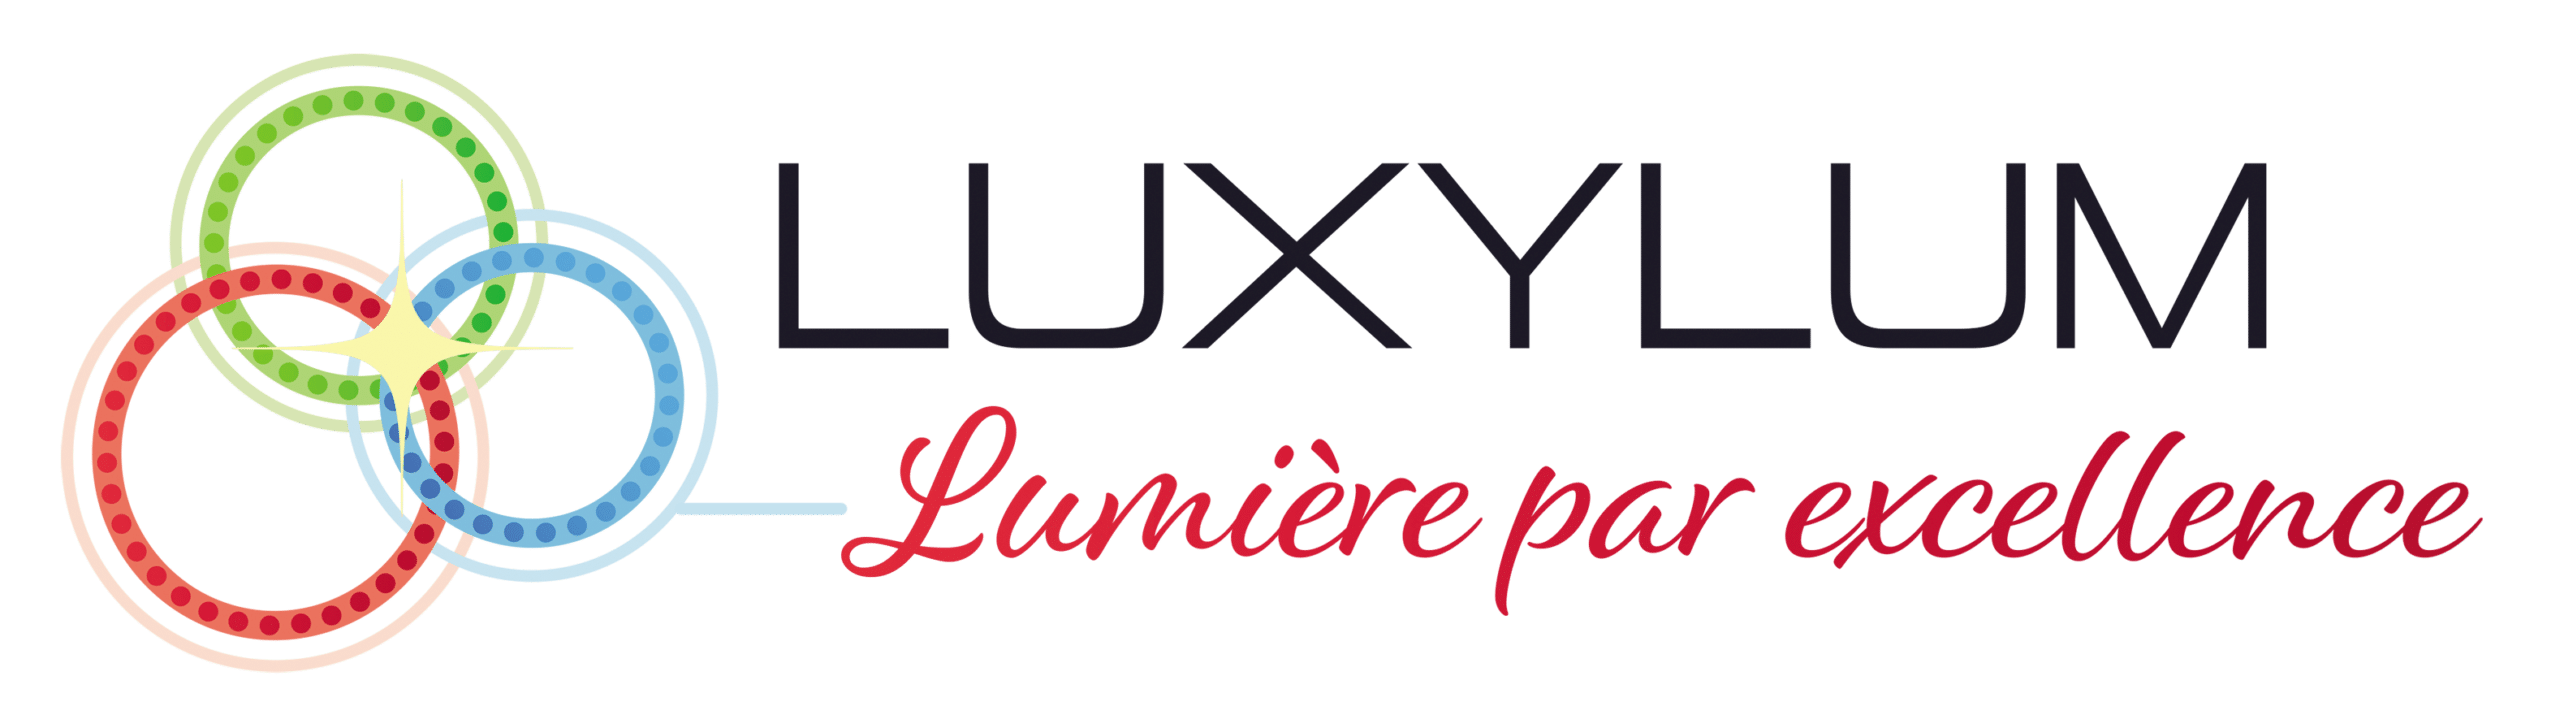 Logo luxylum led alsace